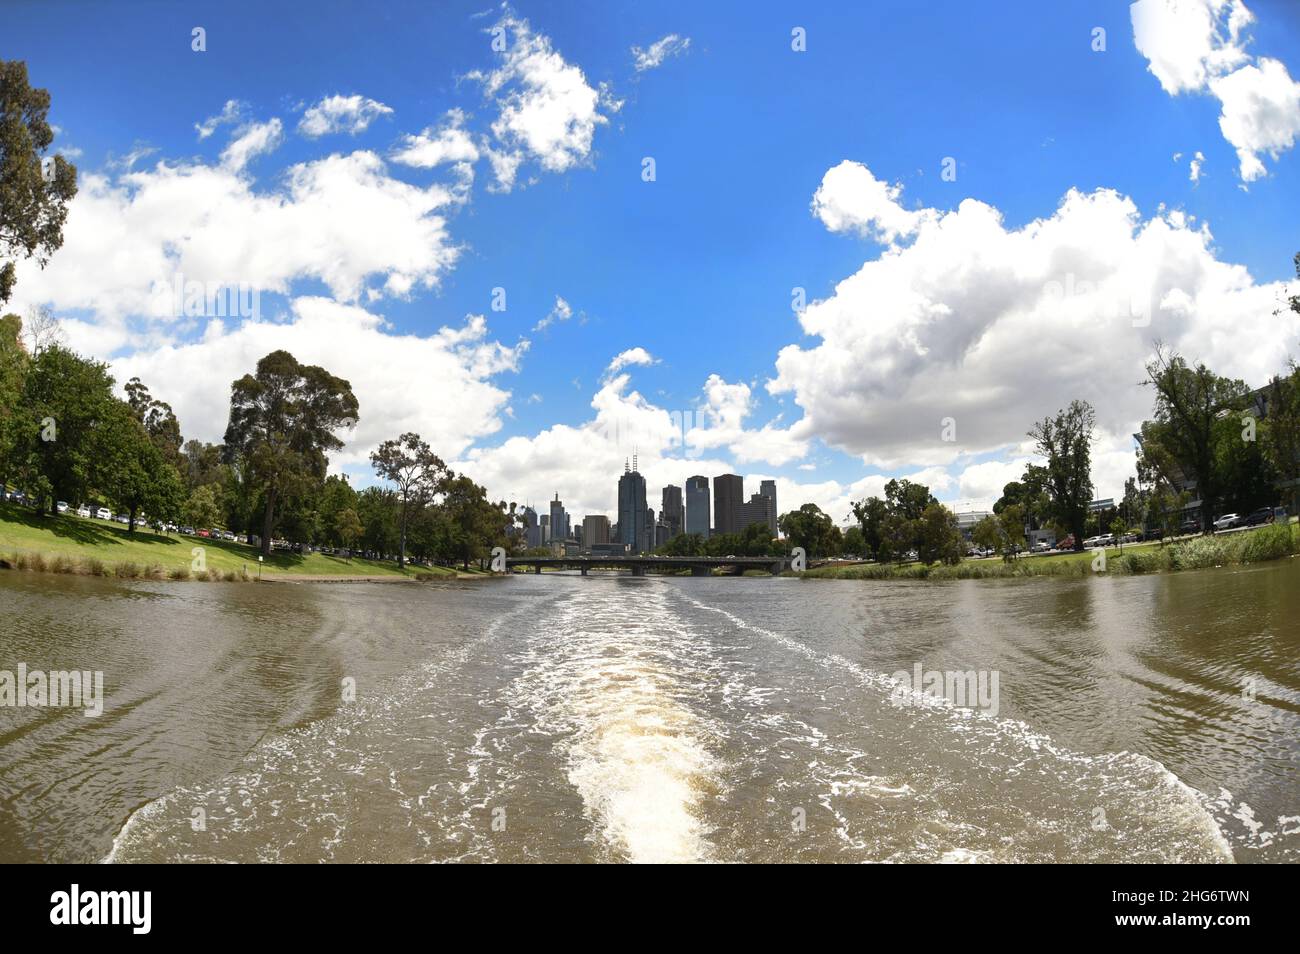 Melbourne City Yarra Flusskreuzfahrt, Victoria, Australien Reiseurlaub Stockfoto